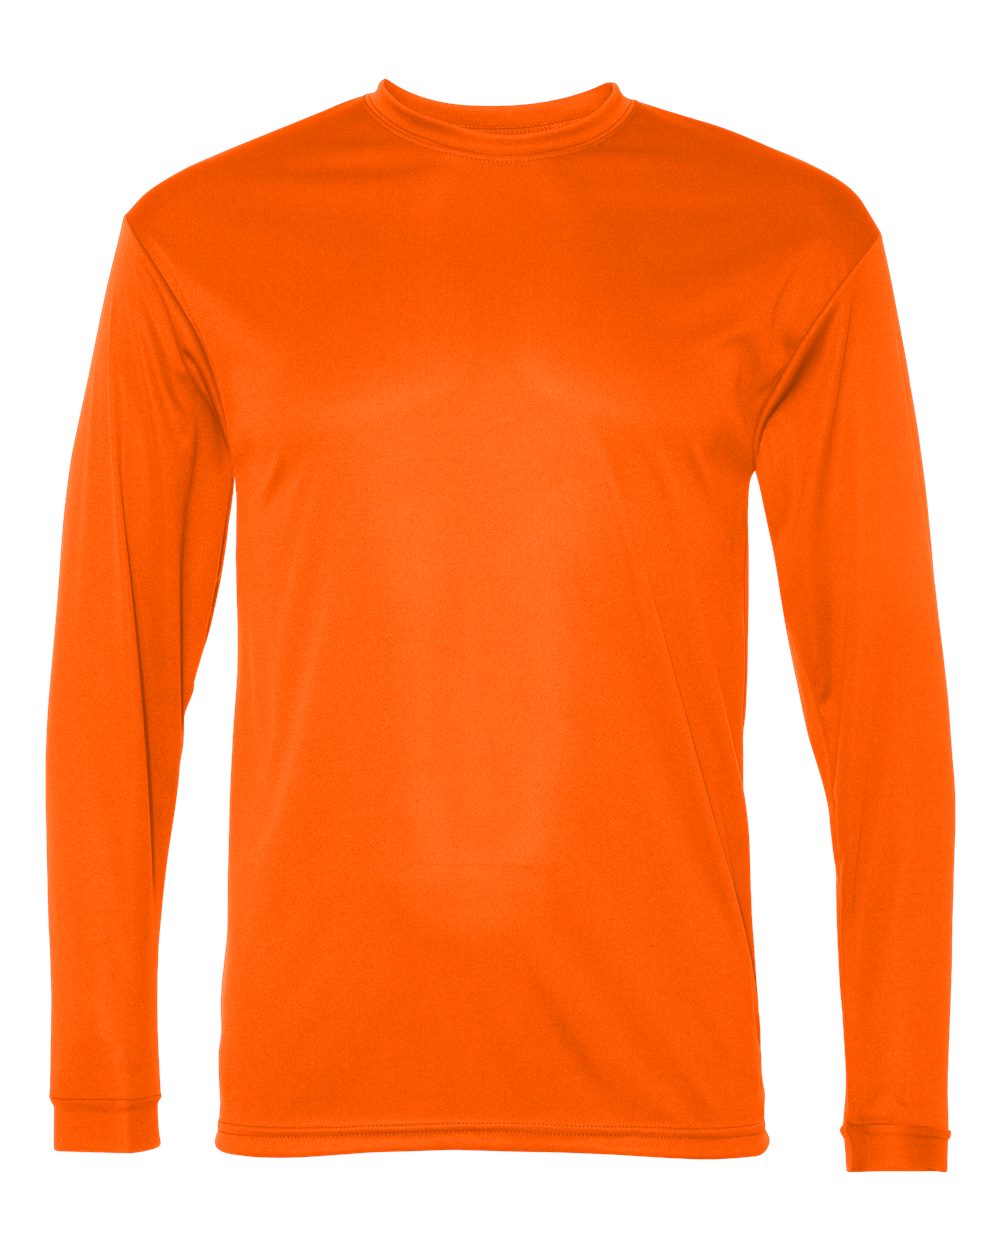 C2 Sport 5104 Performance Shirt :: Safety Orange, Size L